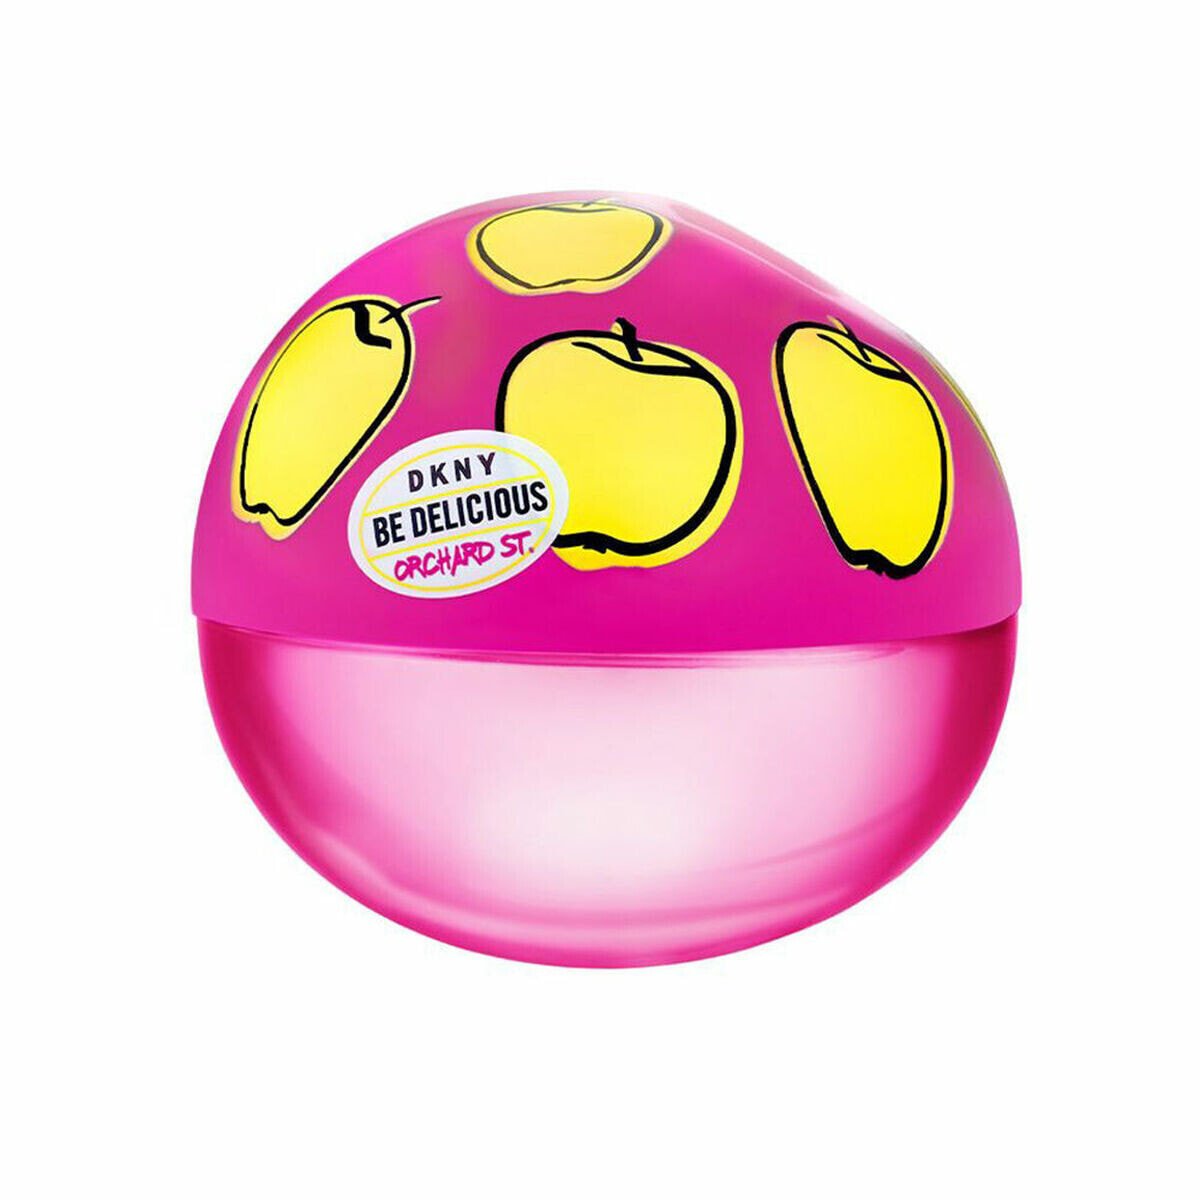 Women's Perfume Donna Karan EDP 50 ml Be Delicious Orchard St.